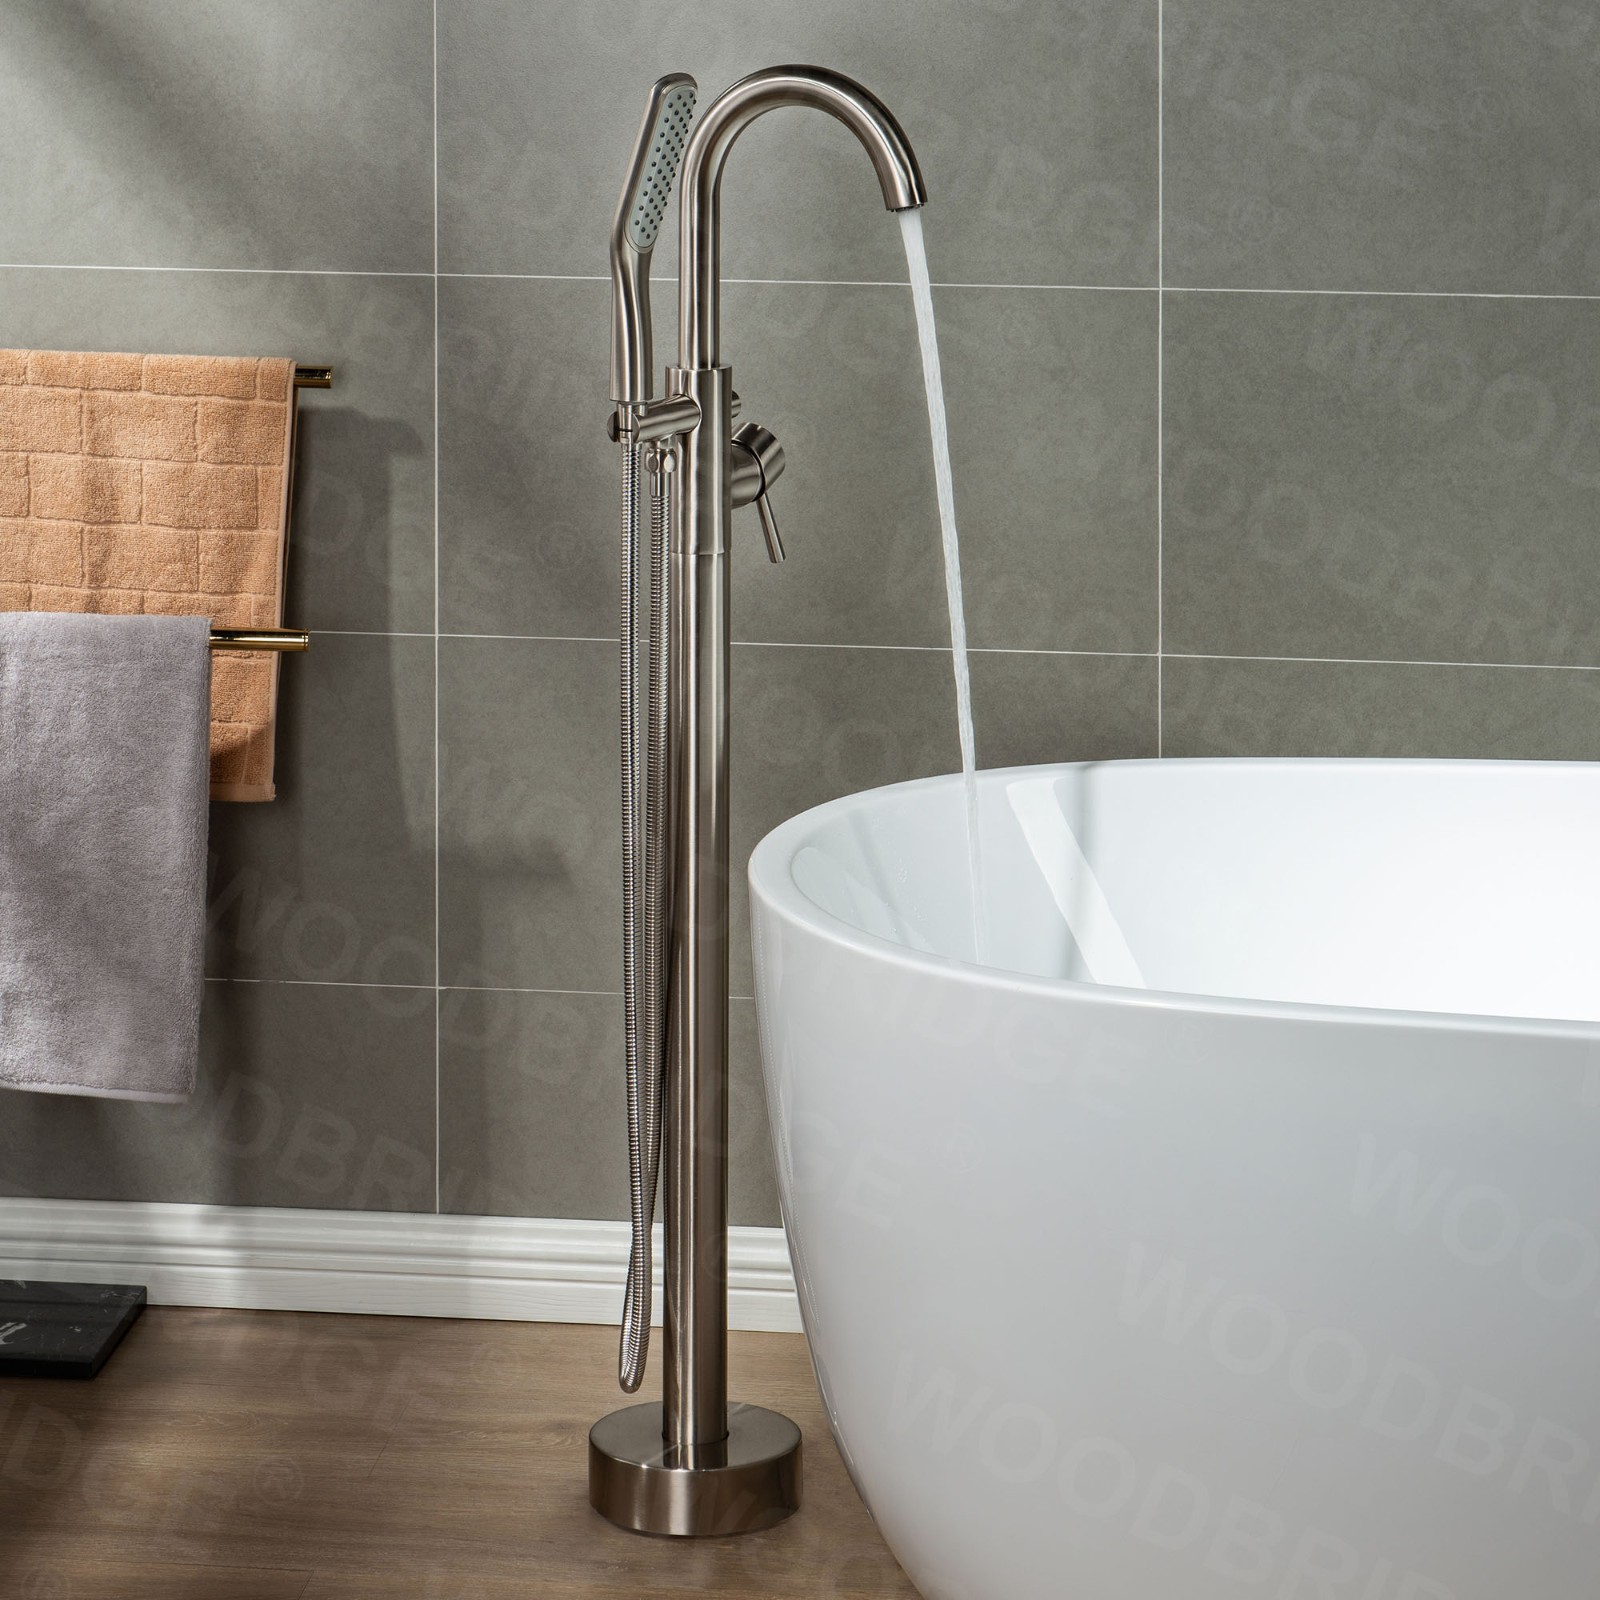  WOODBRIDGE WOODBRIDGEE Contemporary Single Handle Floor Mount Freestanding Tub Filler Faucet with Hand Shower in (Brushed Nickel) Finish,F0001BNSQ_7869